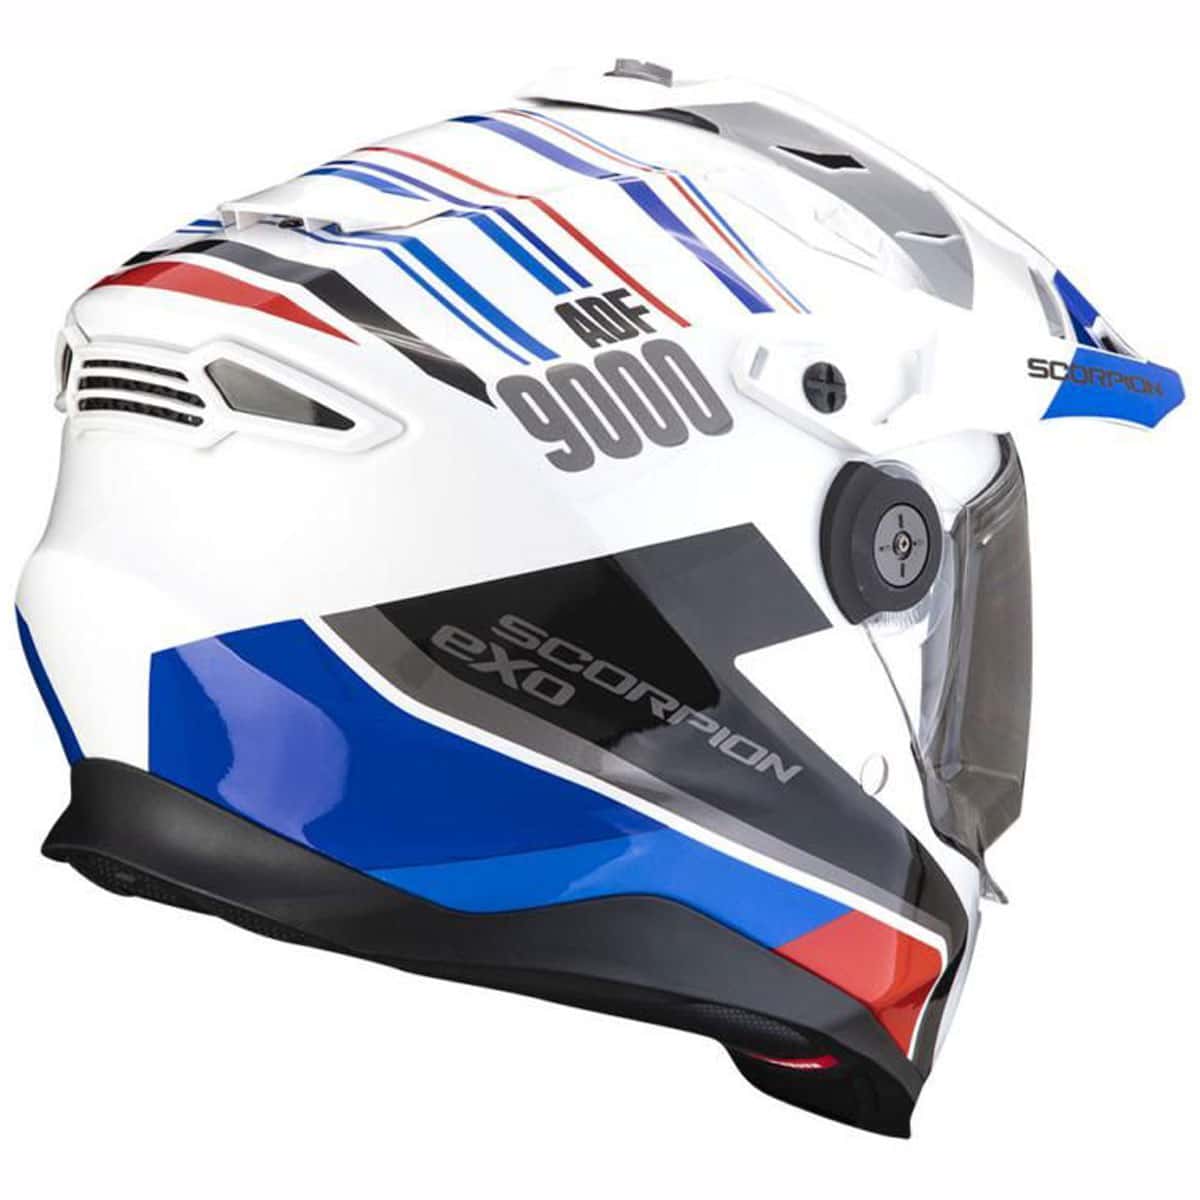 Scorpion ADF 9000 Adventure Helmet Desert - White Blue Red back